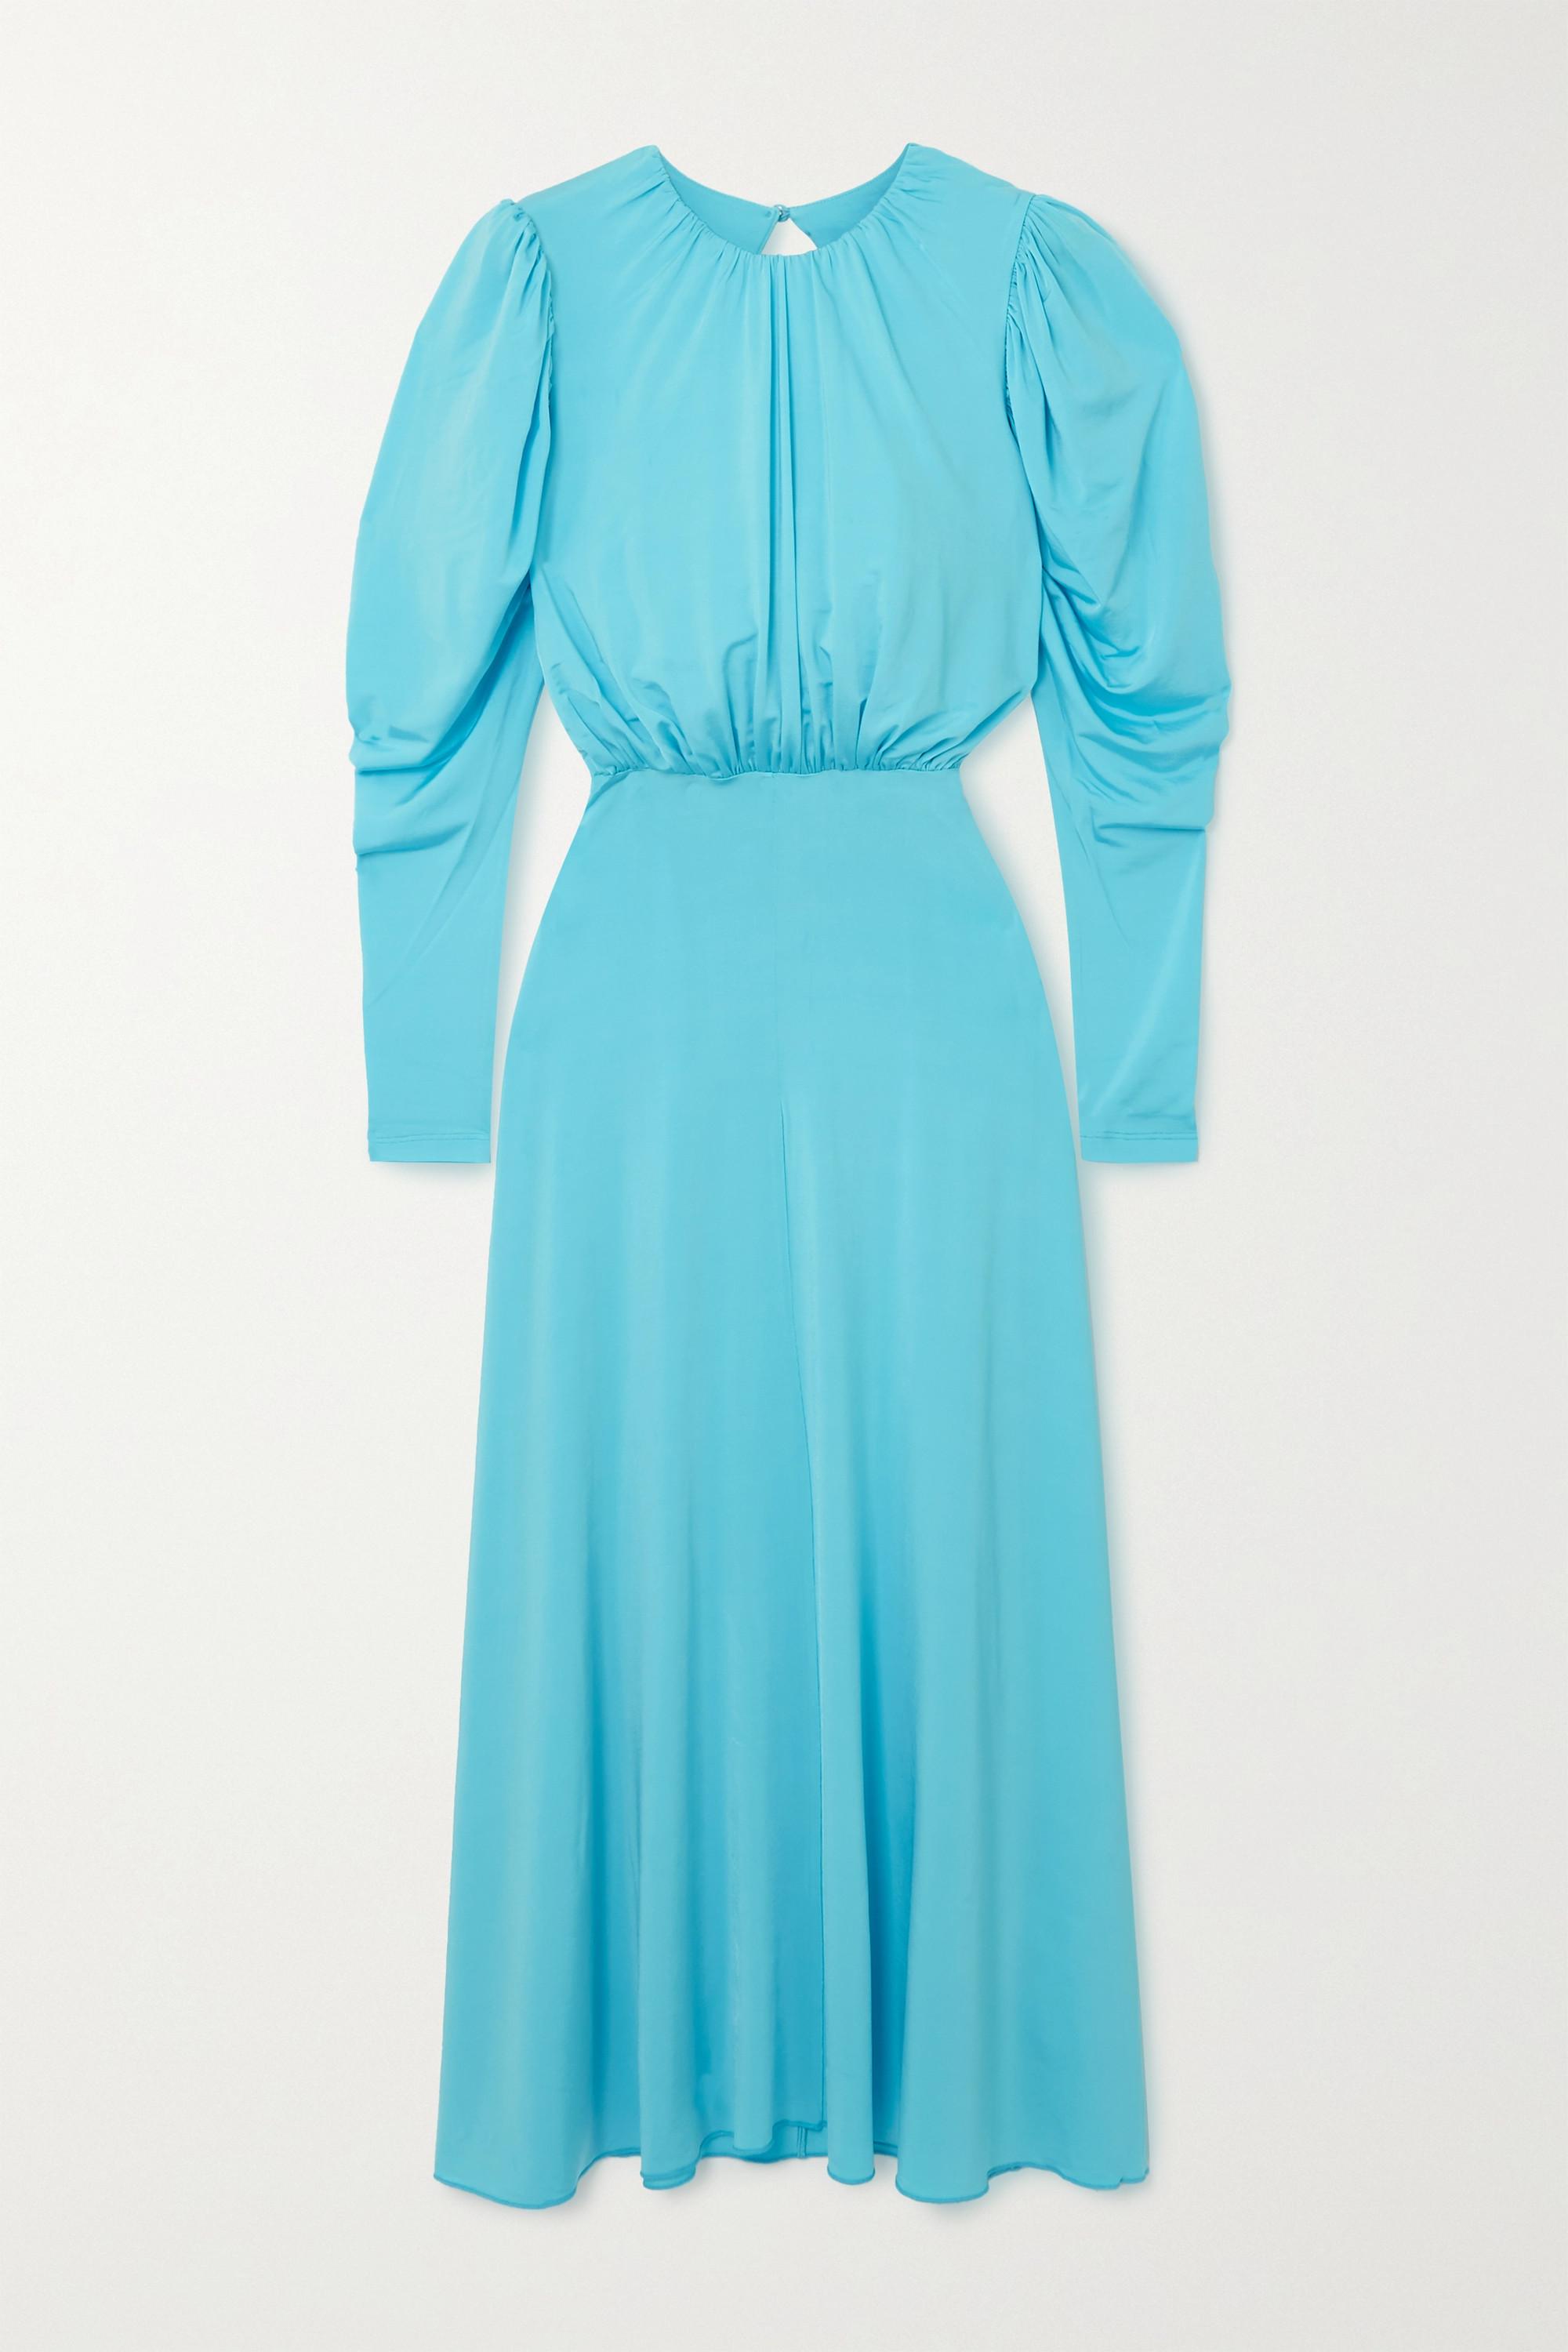 ROTATE BIRGER CHRISTENSEN Synthetic Laura Open-back Jersey Midi Dress in  Azure (Blue) - Lyst